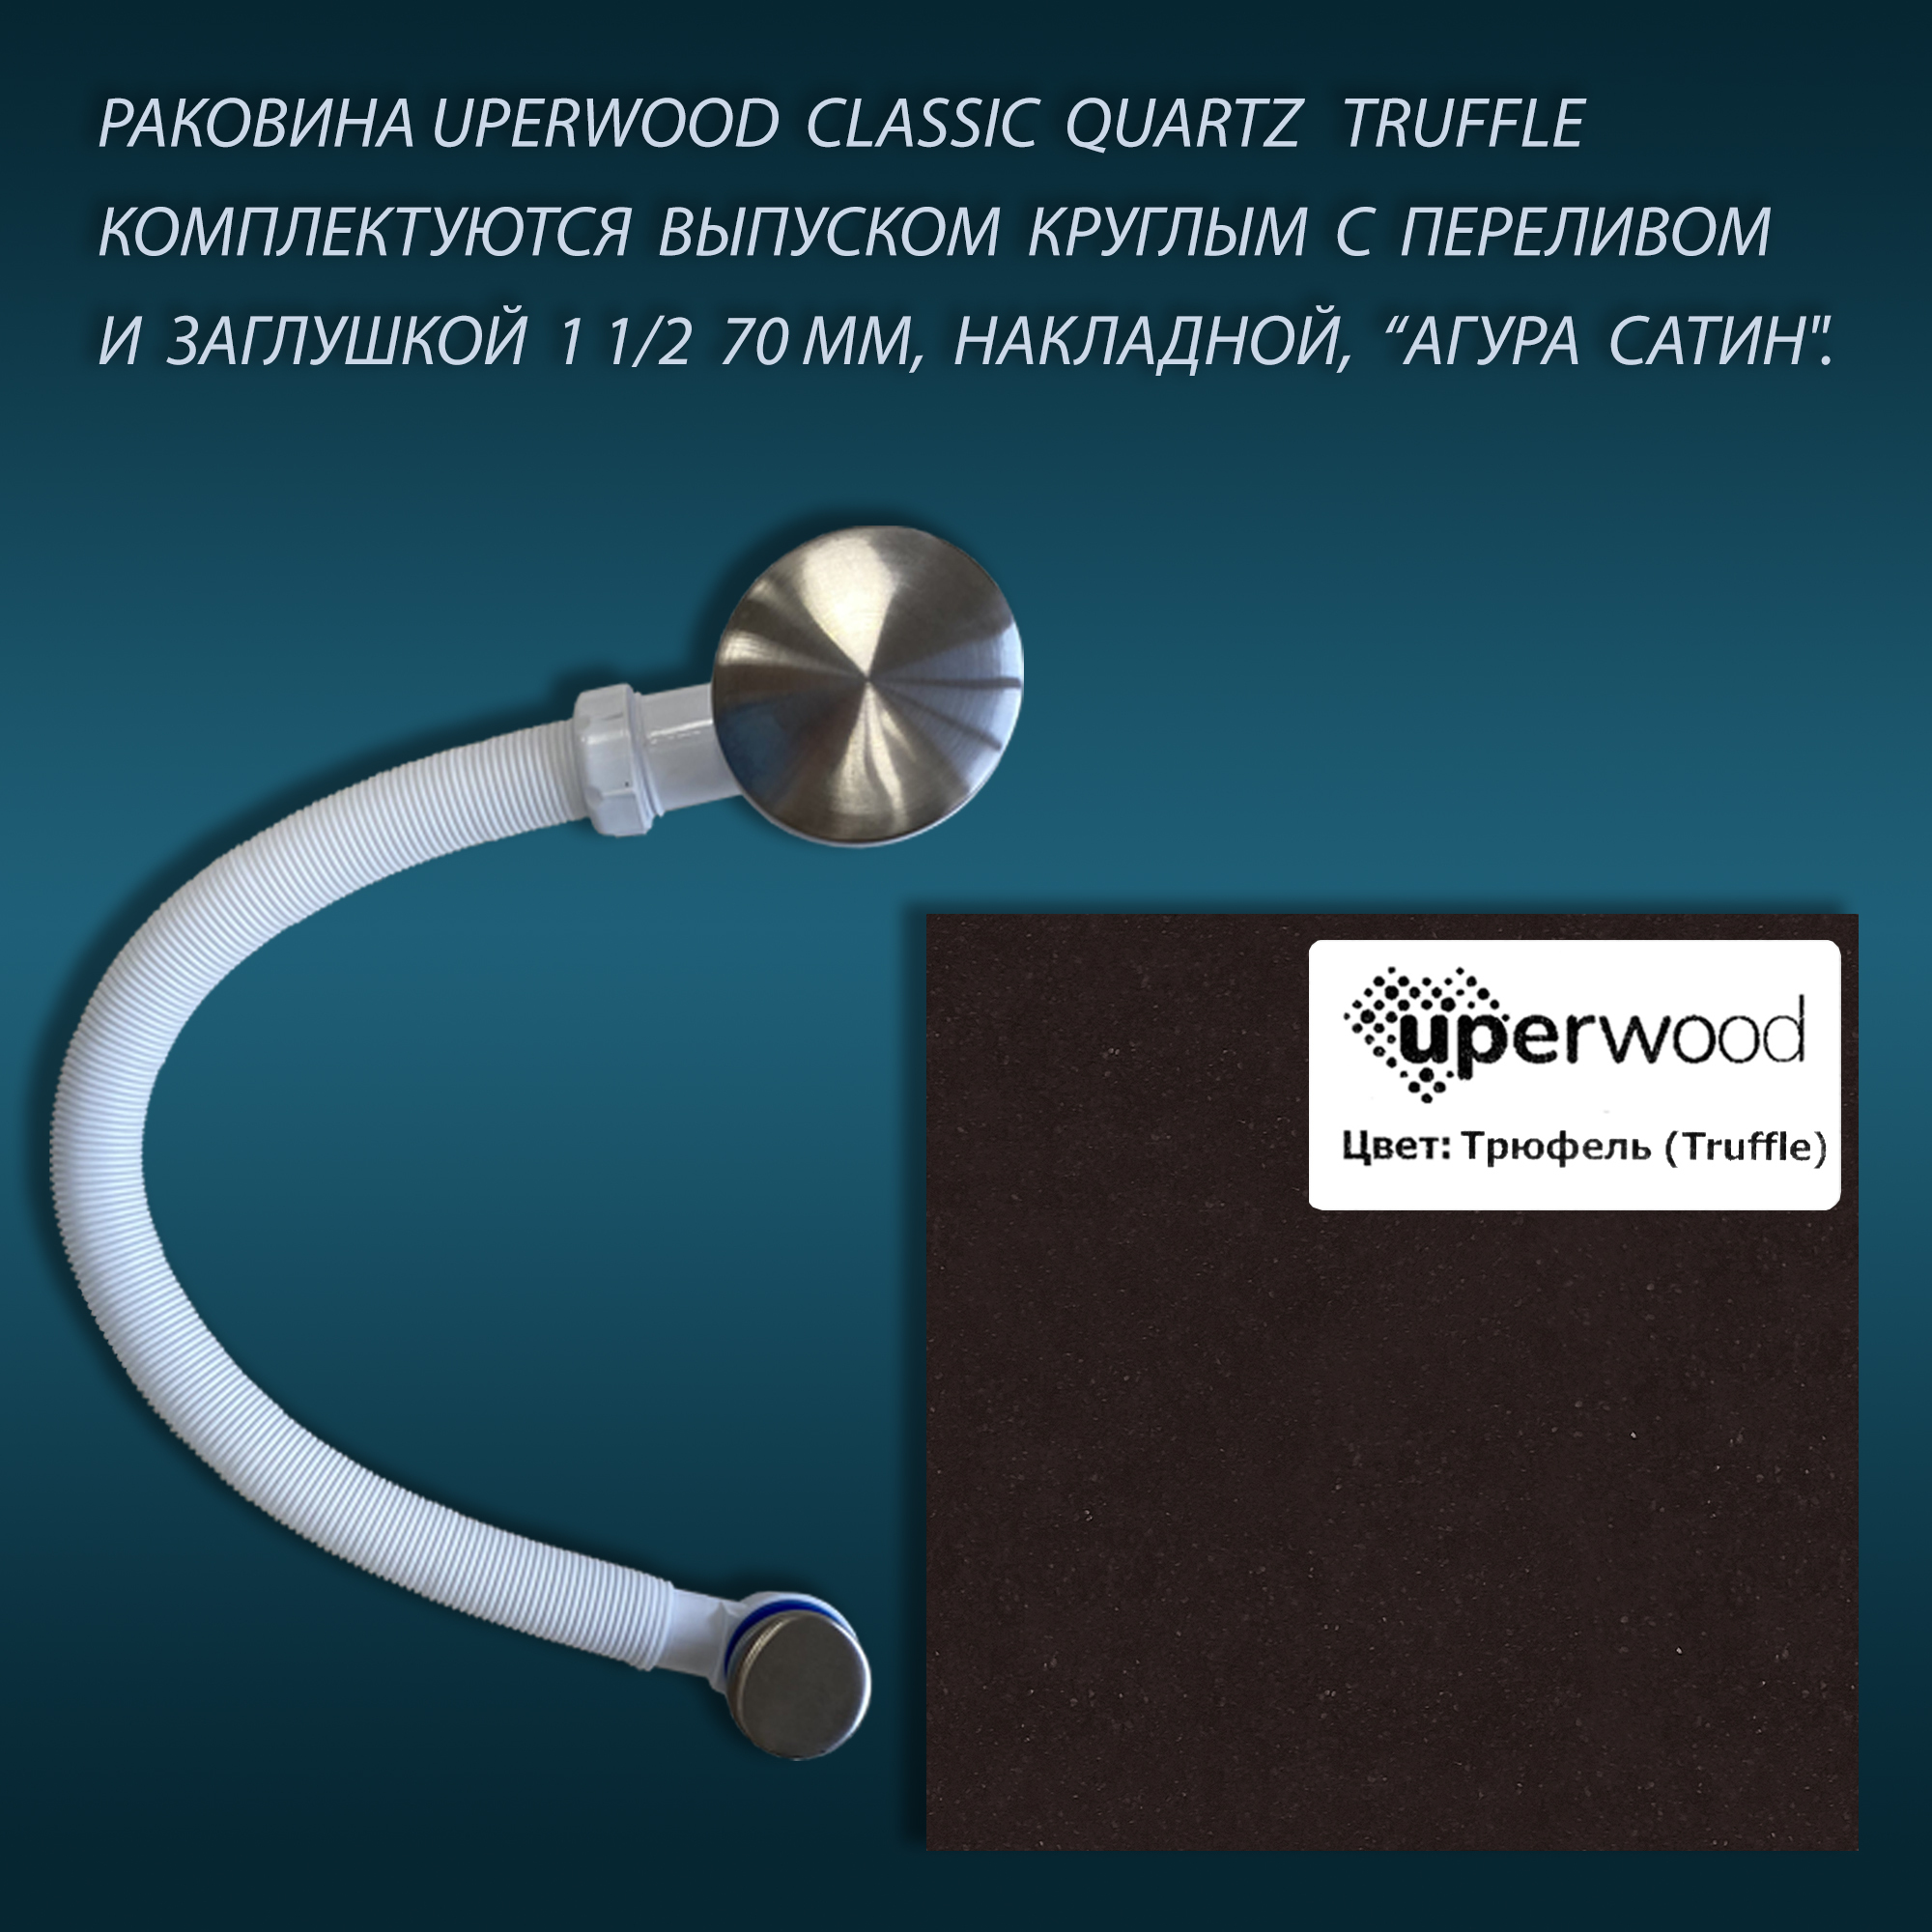 Раковина кварцевая Uperwood UPD Classic Quartz 80 см 291030026 коричневая, цвет коричневый - фото 7